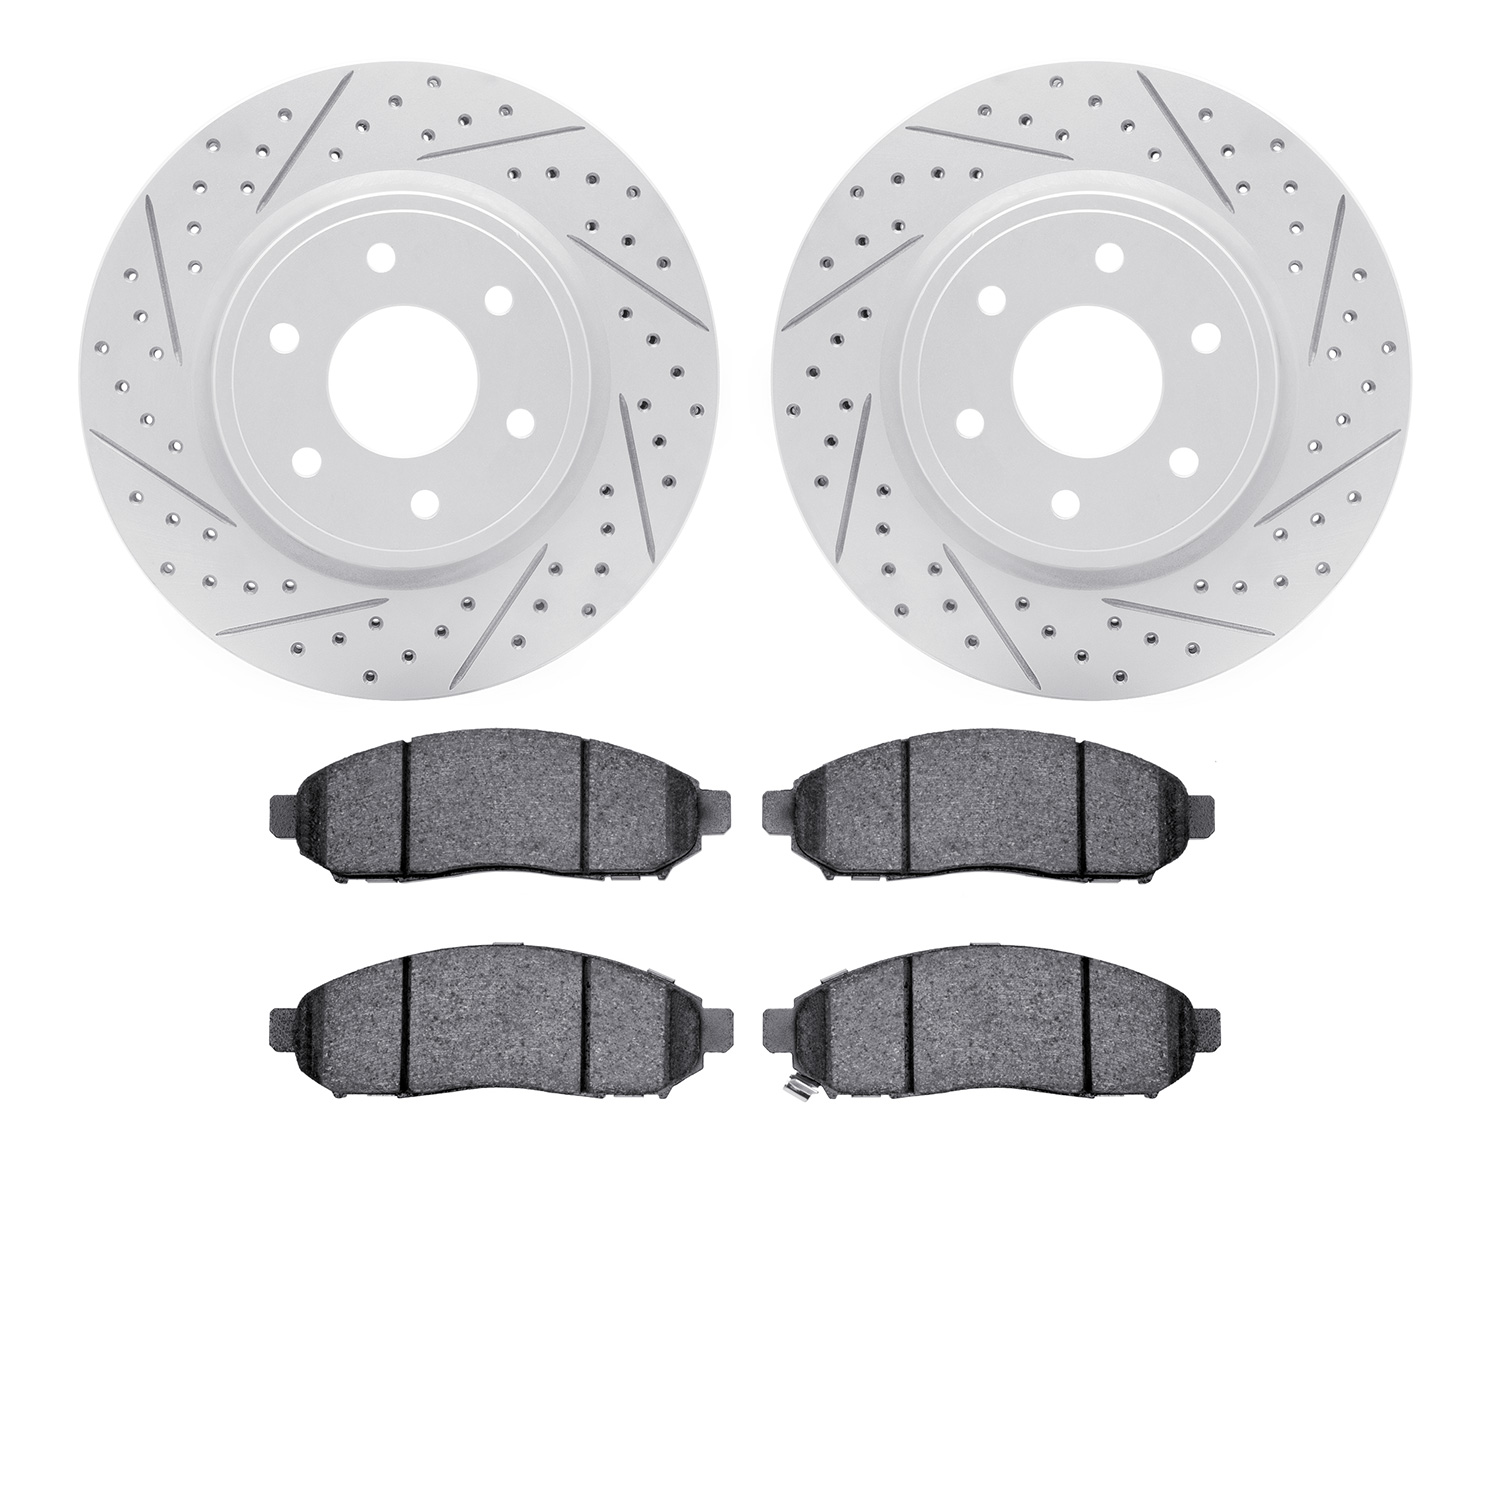 2502-67107 Geoperformance Drilled/Slotted Rotors w/5000 Advanced Brake Pads Kit, Fits Select Multiple Makes/Models, Position: Fr